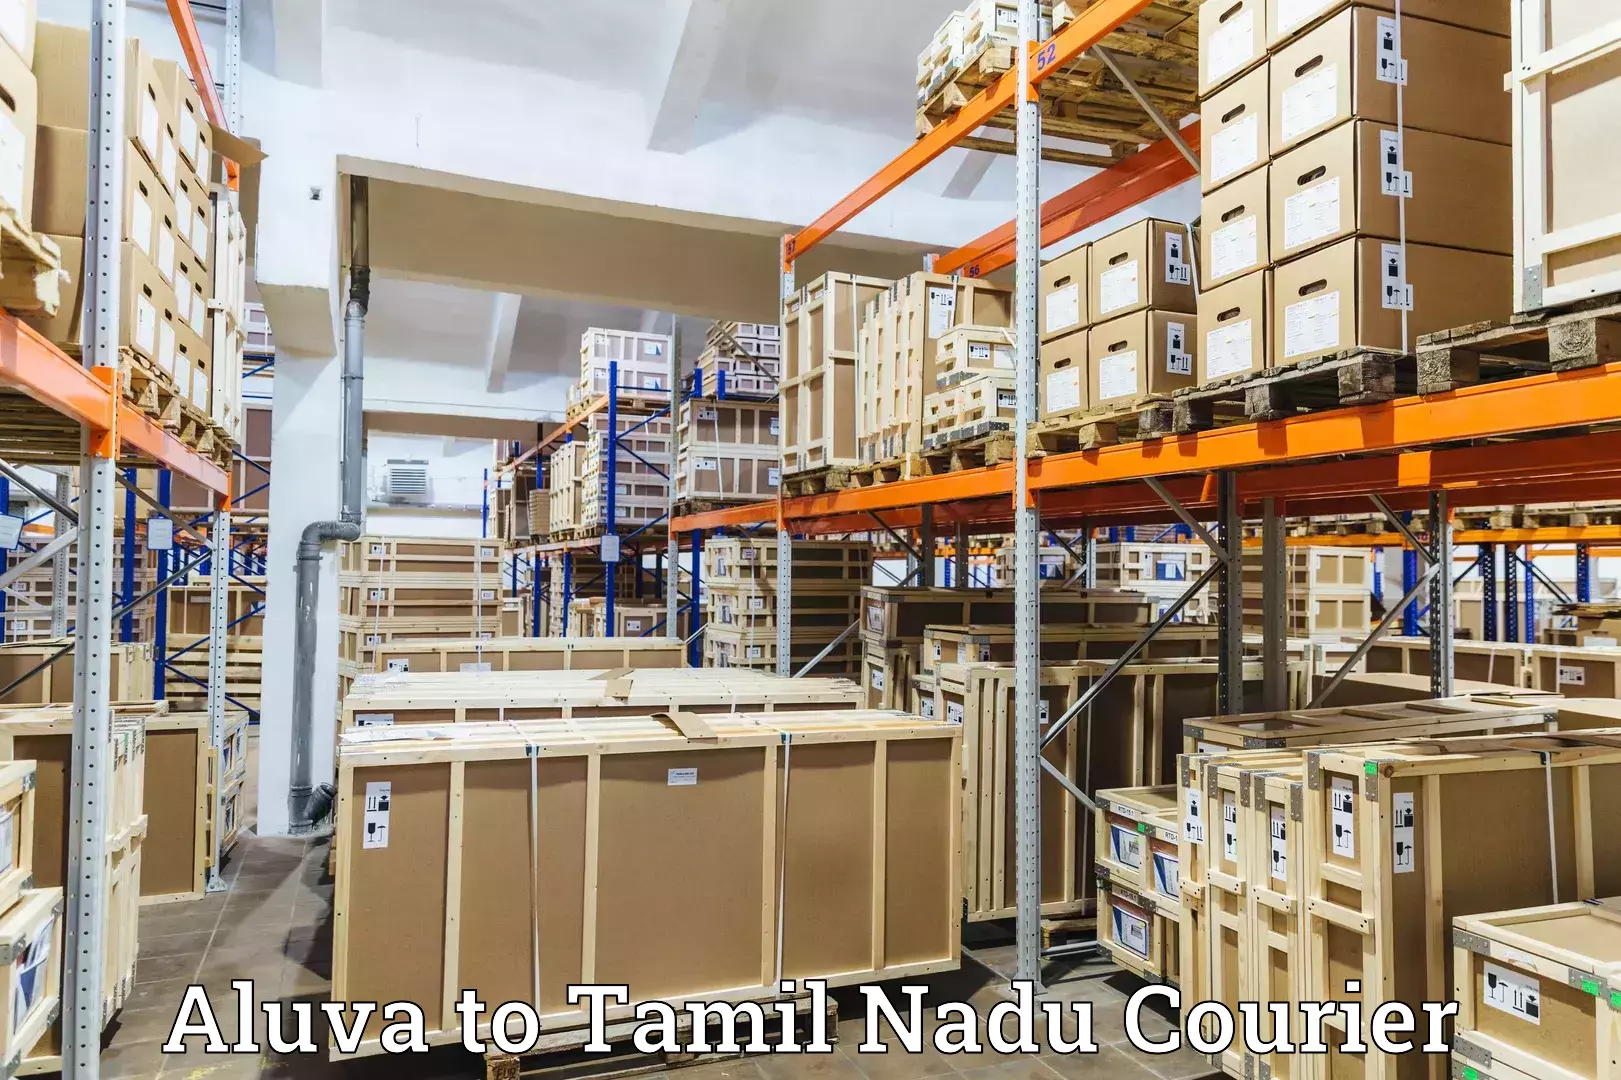 Pharmaceutical courier Aluva to Tamil Nadu